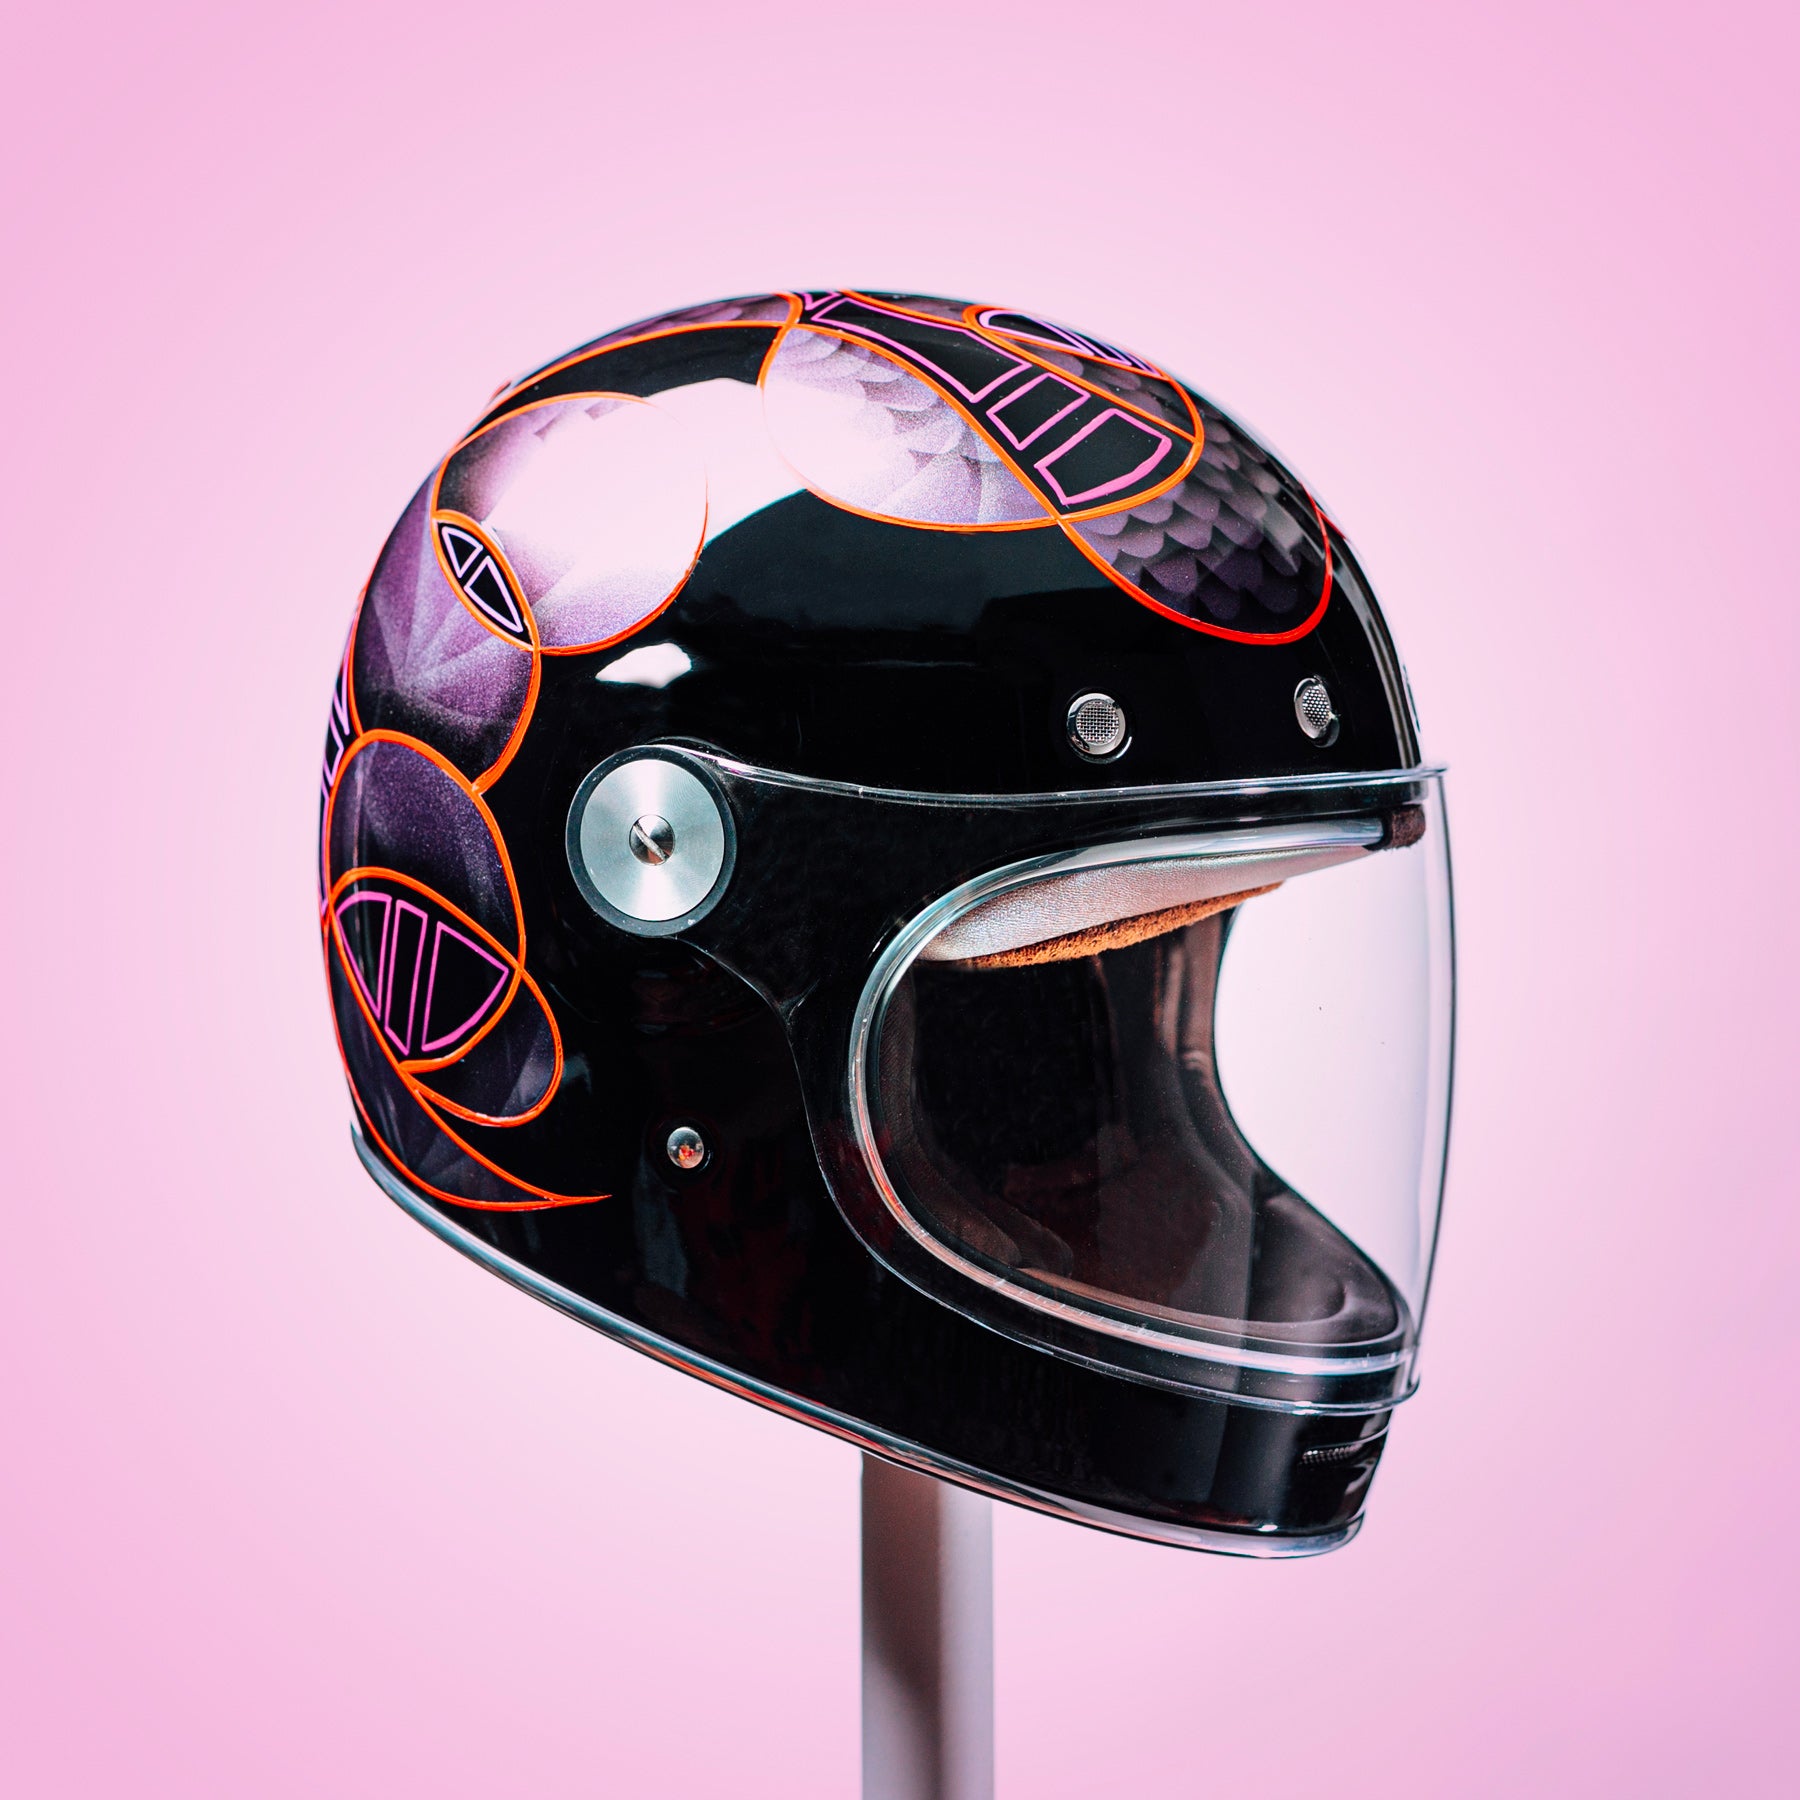 Trippy Ten helmet art show Pittsburgh Glory Daze motorcycle show Kurt Alexa Diserio Bell Helmets Phil Leonard Syrarium Studios